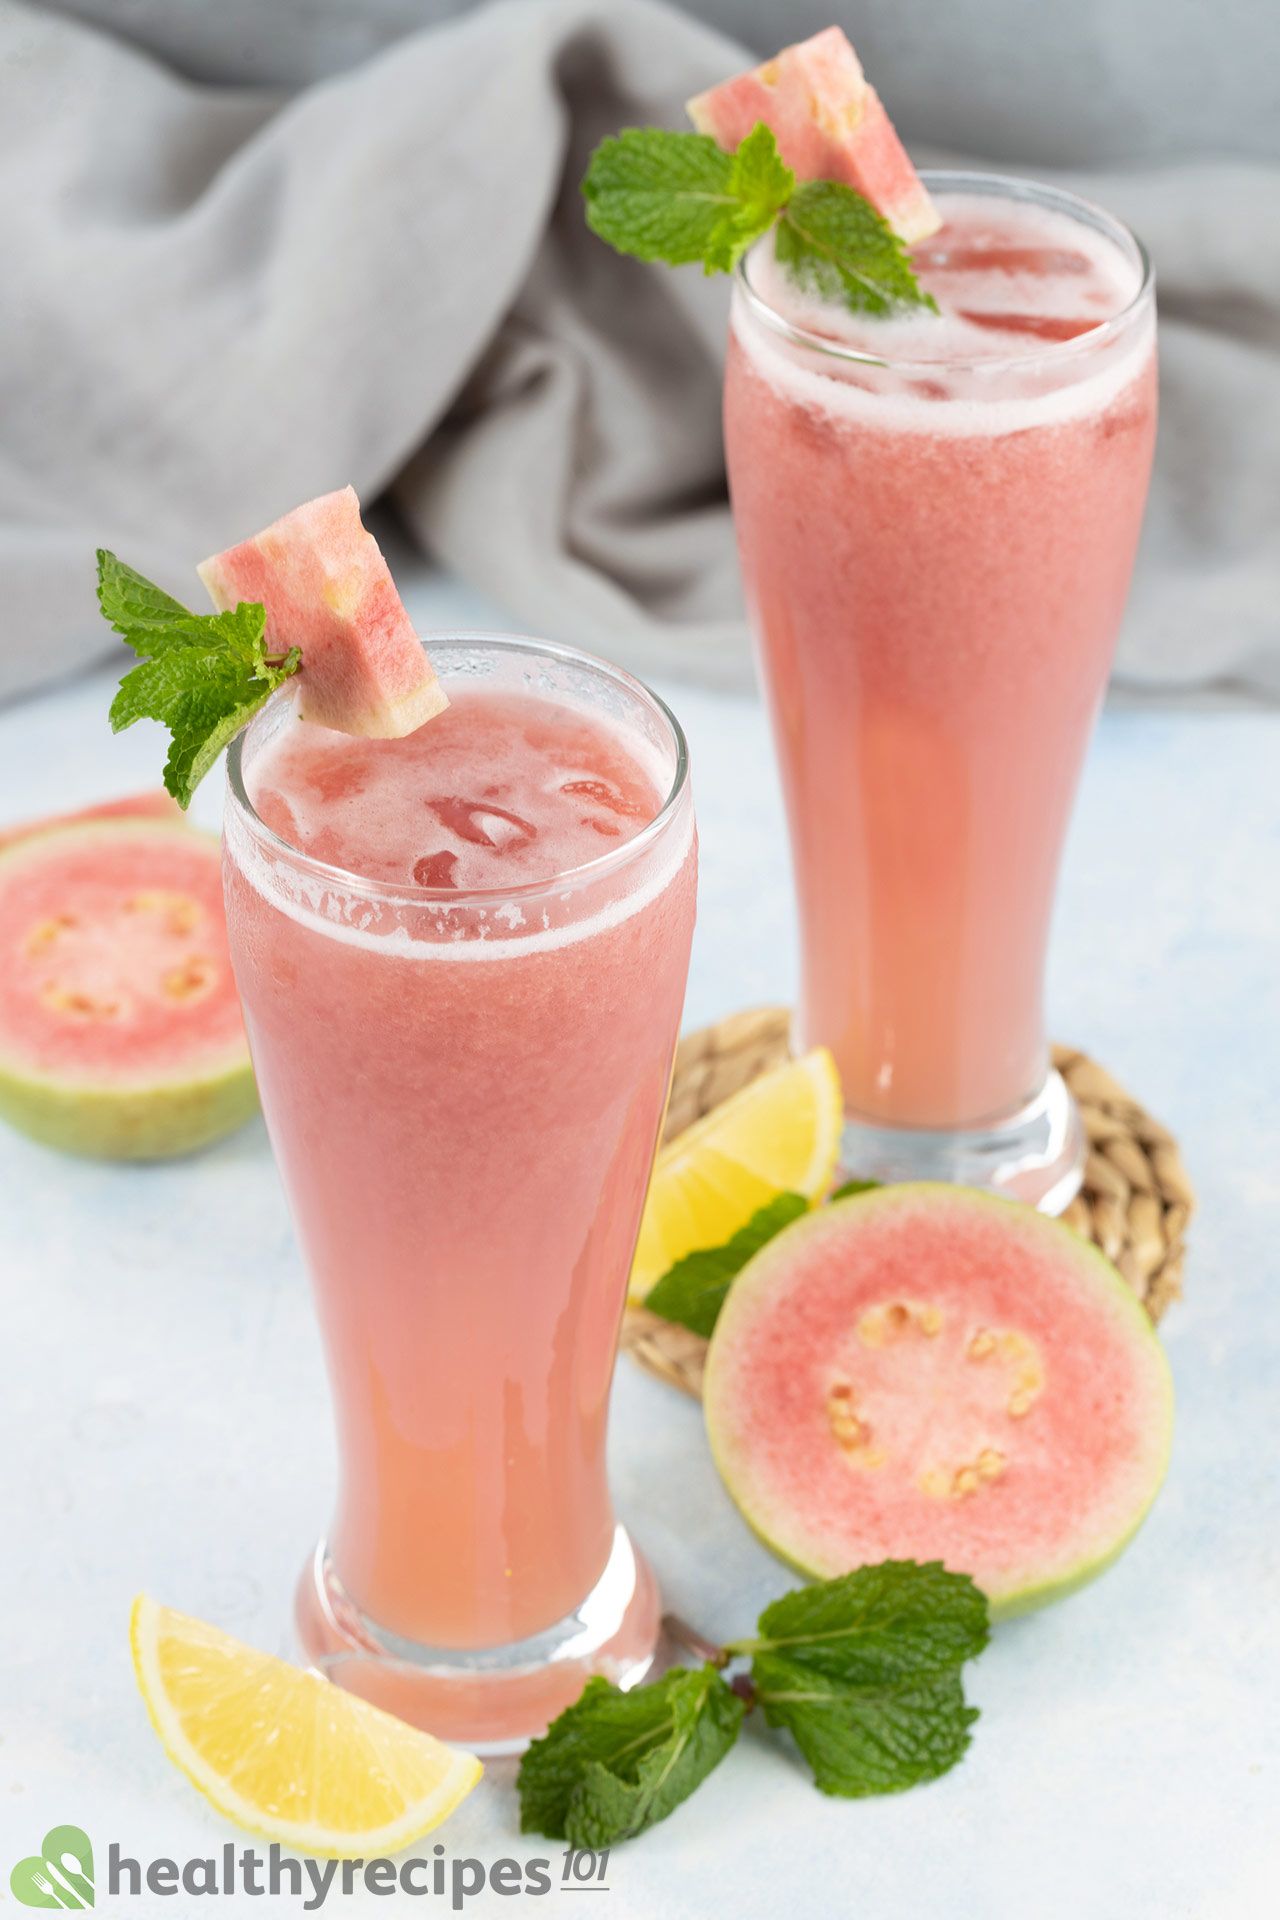 Homemade Guava Juice Recipe